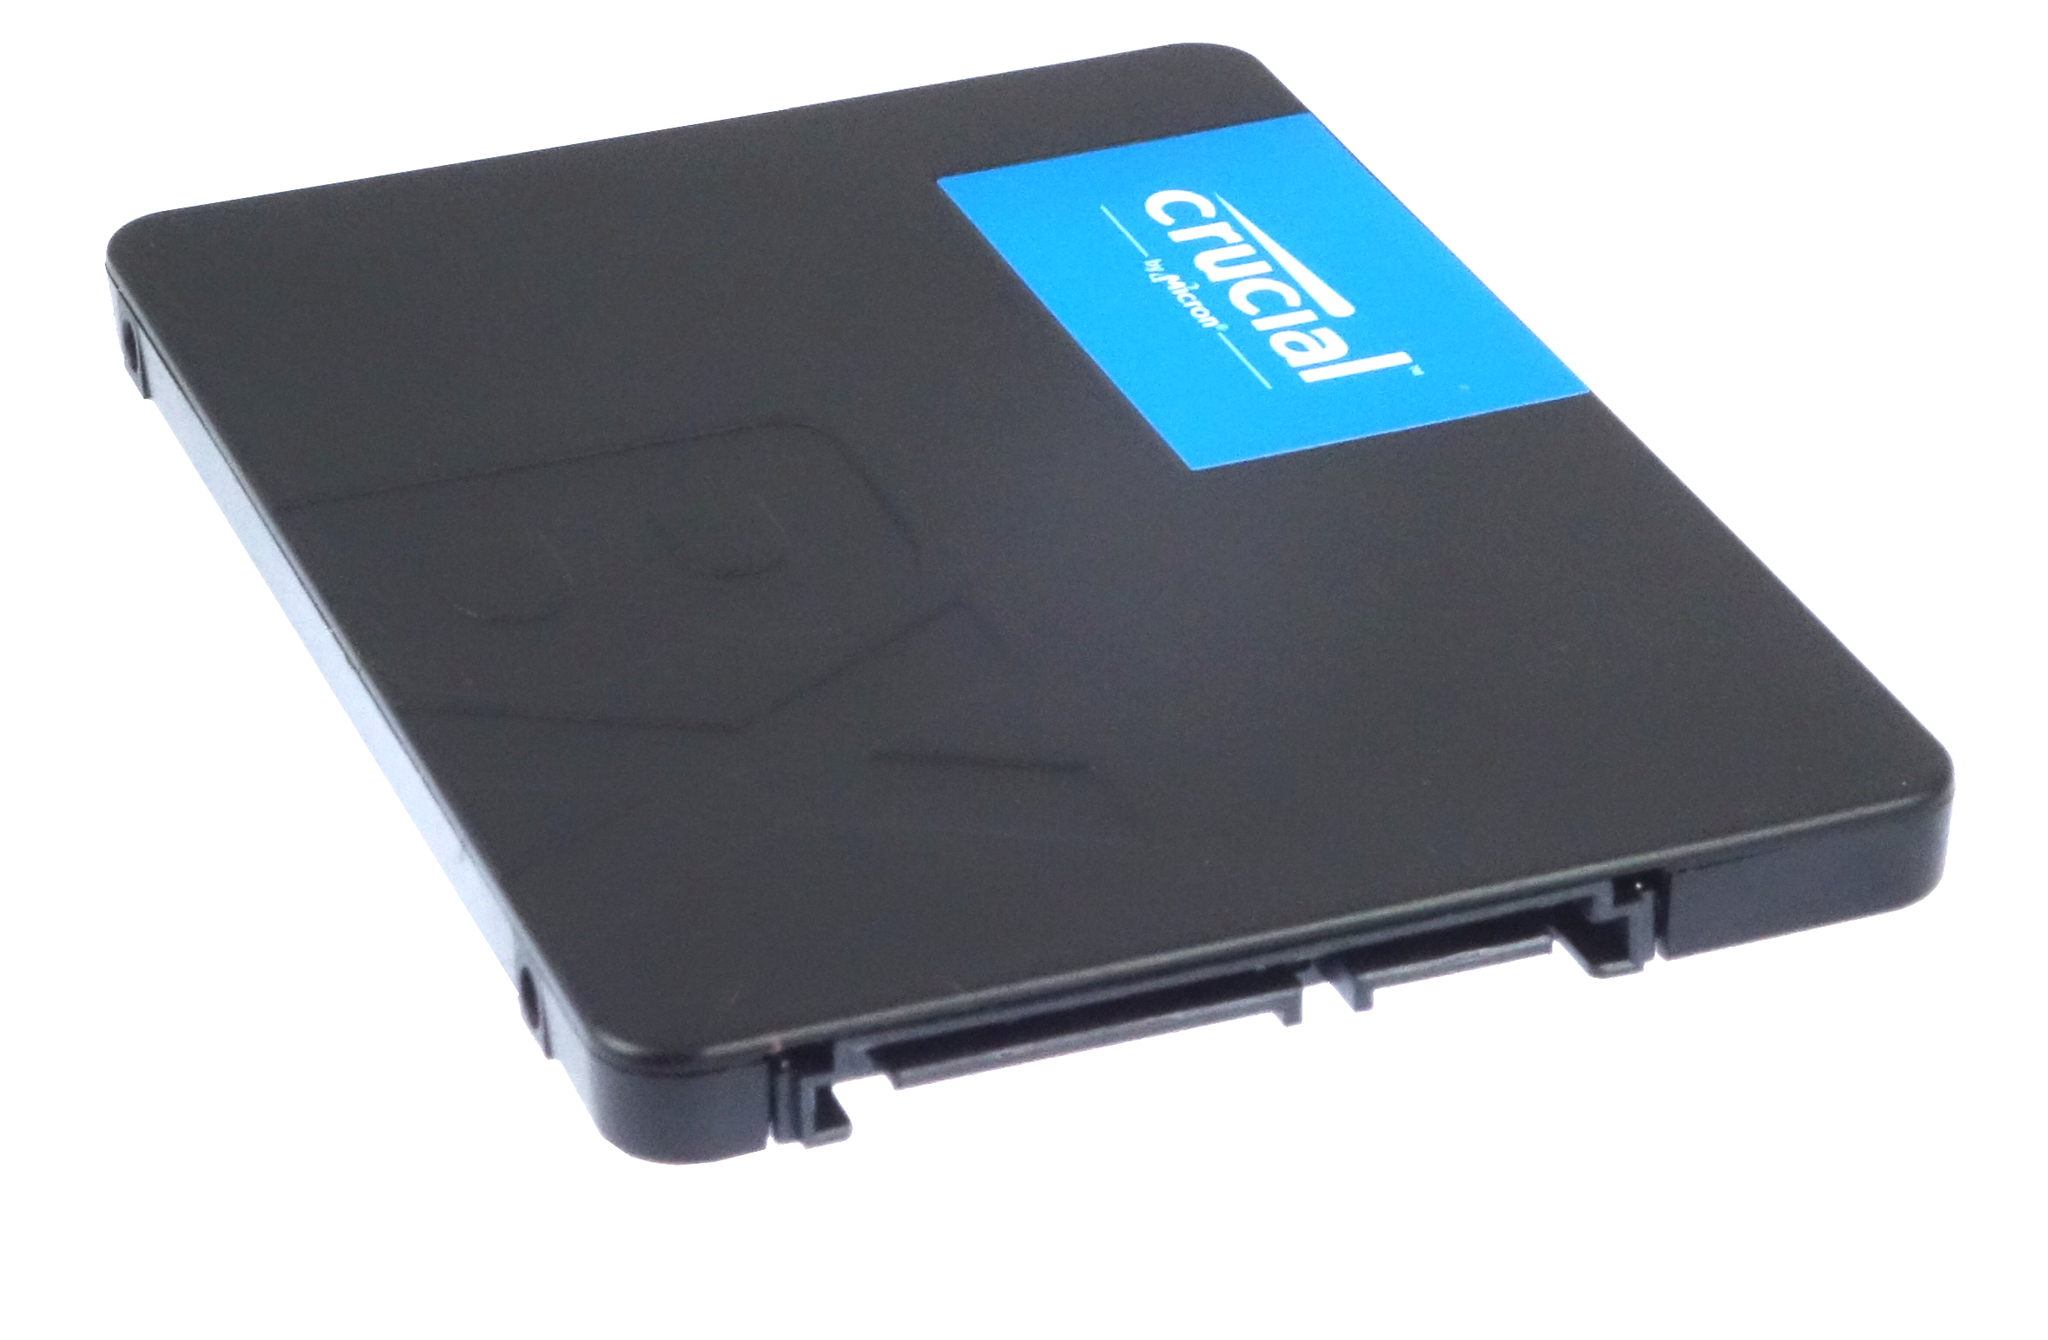 Crucial BX500 480GB SSD Review | KitGuru